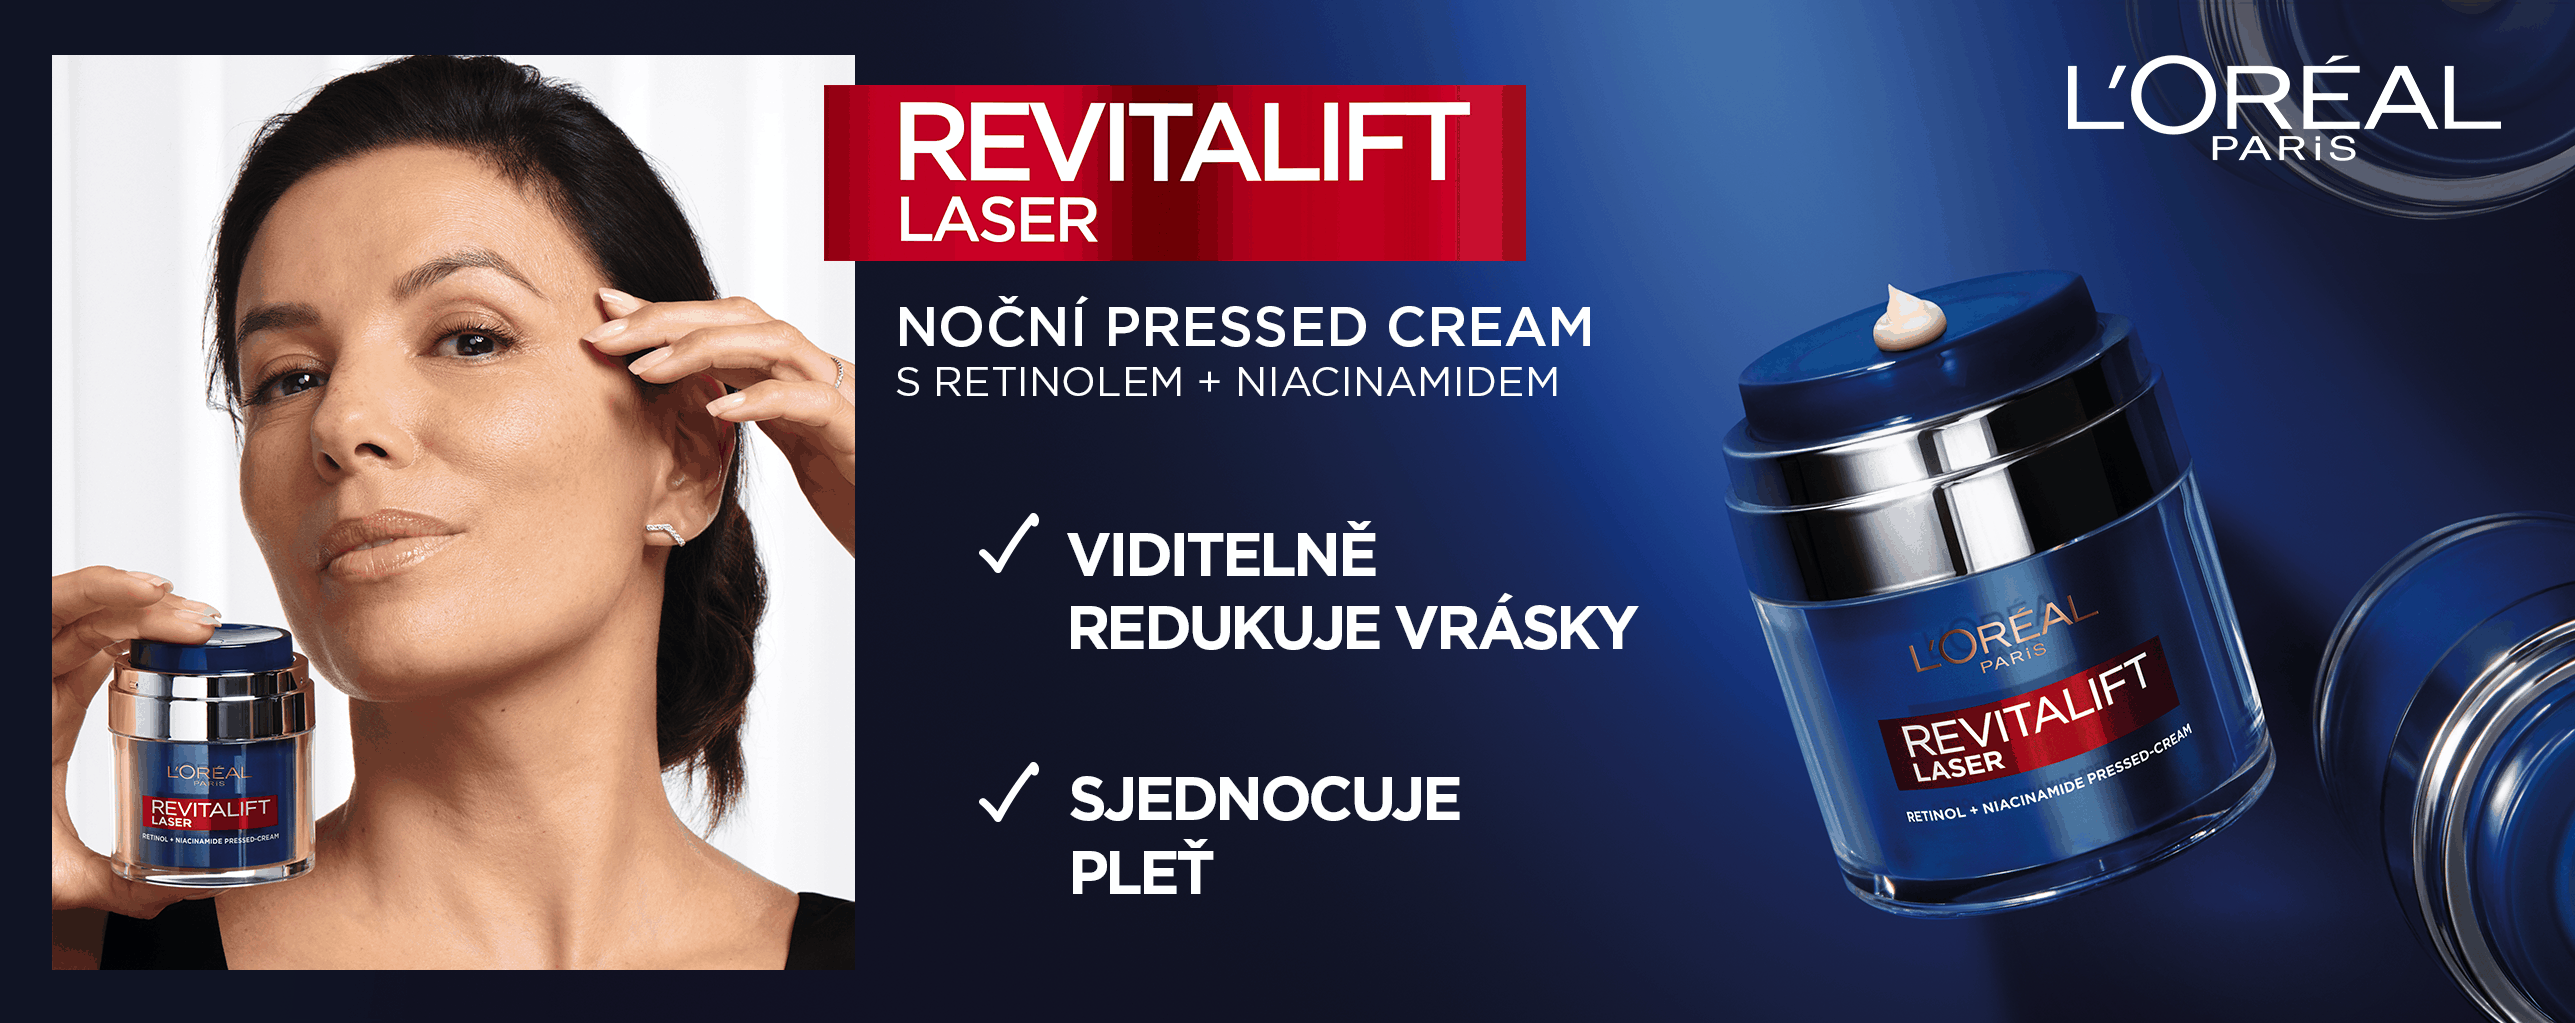 L'Oréal Paris Revitalift Laser Renew Retinol + Niacinamid noční Pressed Cream s retinolem 